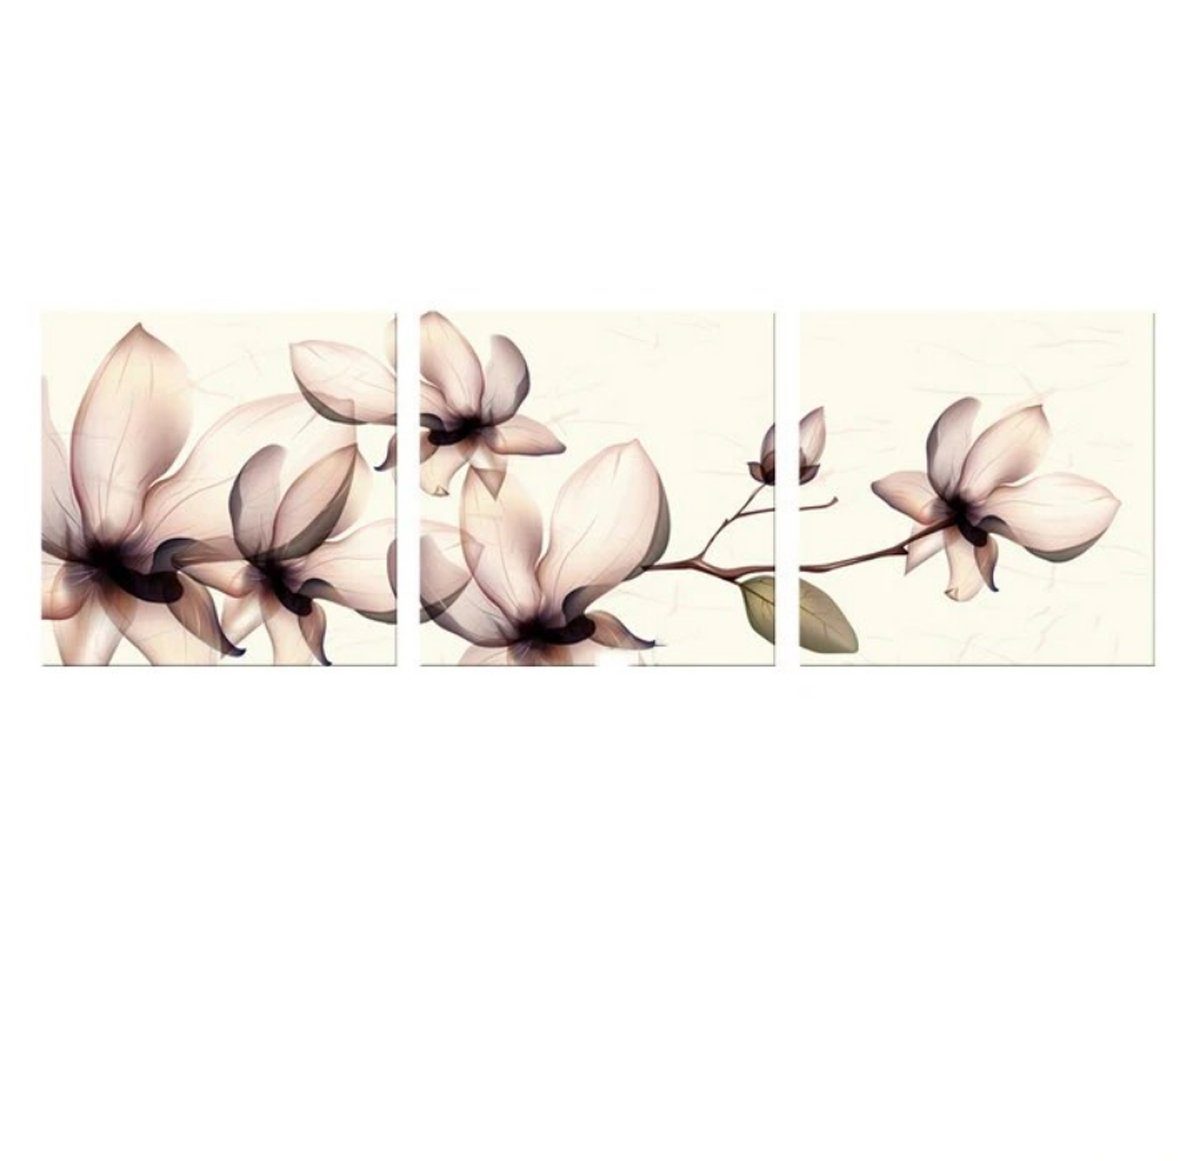 TPFLiving Kunstdruck (OHNE RAHMEN) Poster - Leinwand - Wandbild, 3 Panels Orchideenblüten Poster Wandkunst Leinwandgemälde (Leinwandbild XXL), Farben: Weiß, Rosa, Lila, Grün, Orange, Blau -Größe: 40x40cm